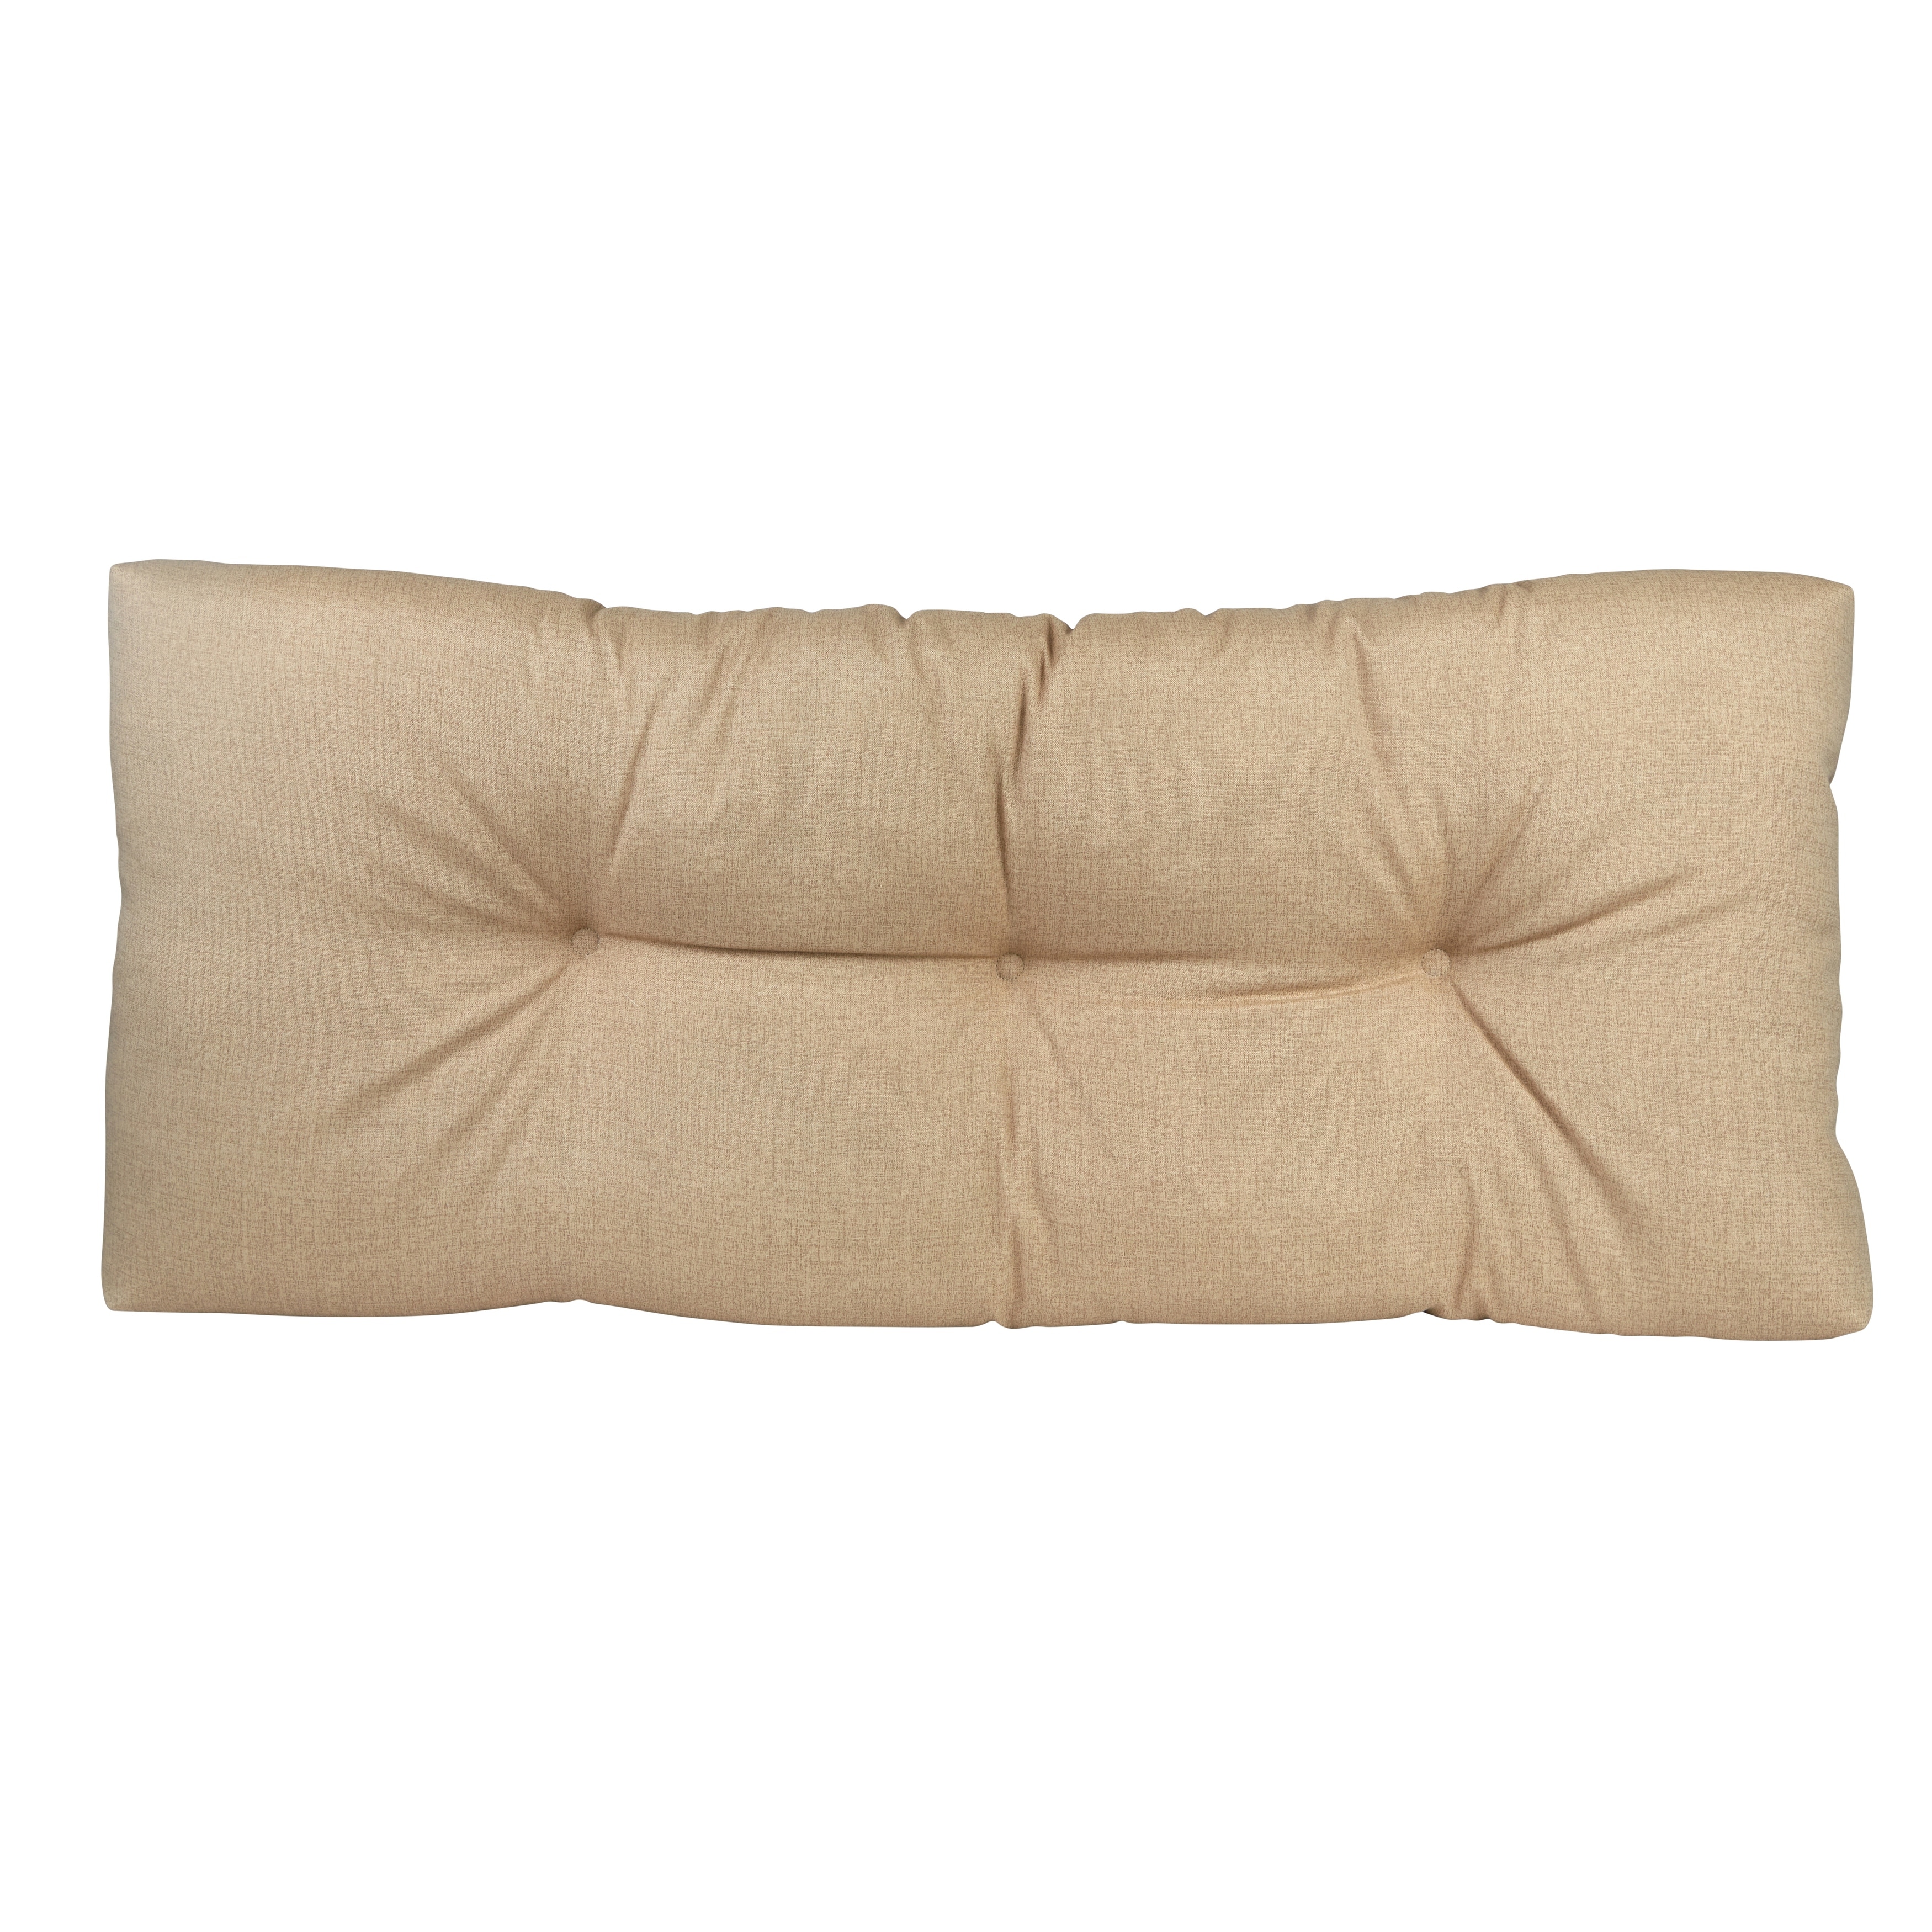 Klear Vu Husk Birch Indoor/Outdoor Patio Bench Cushion